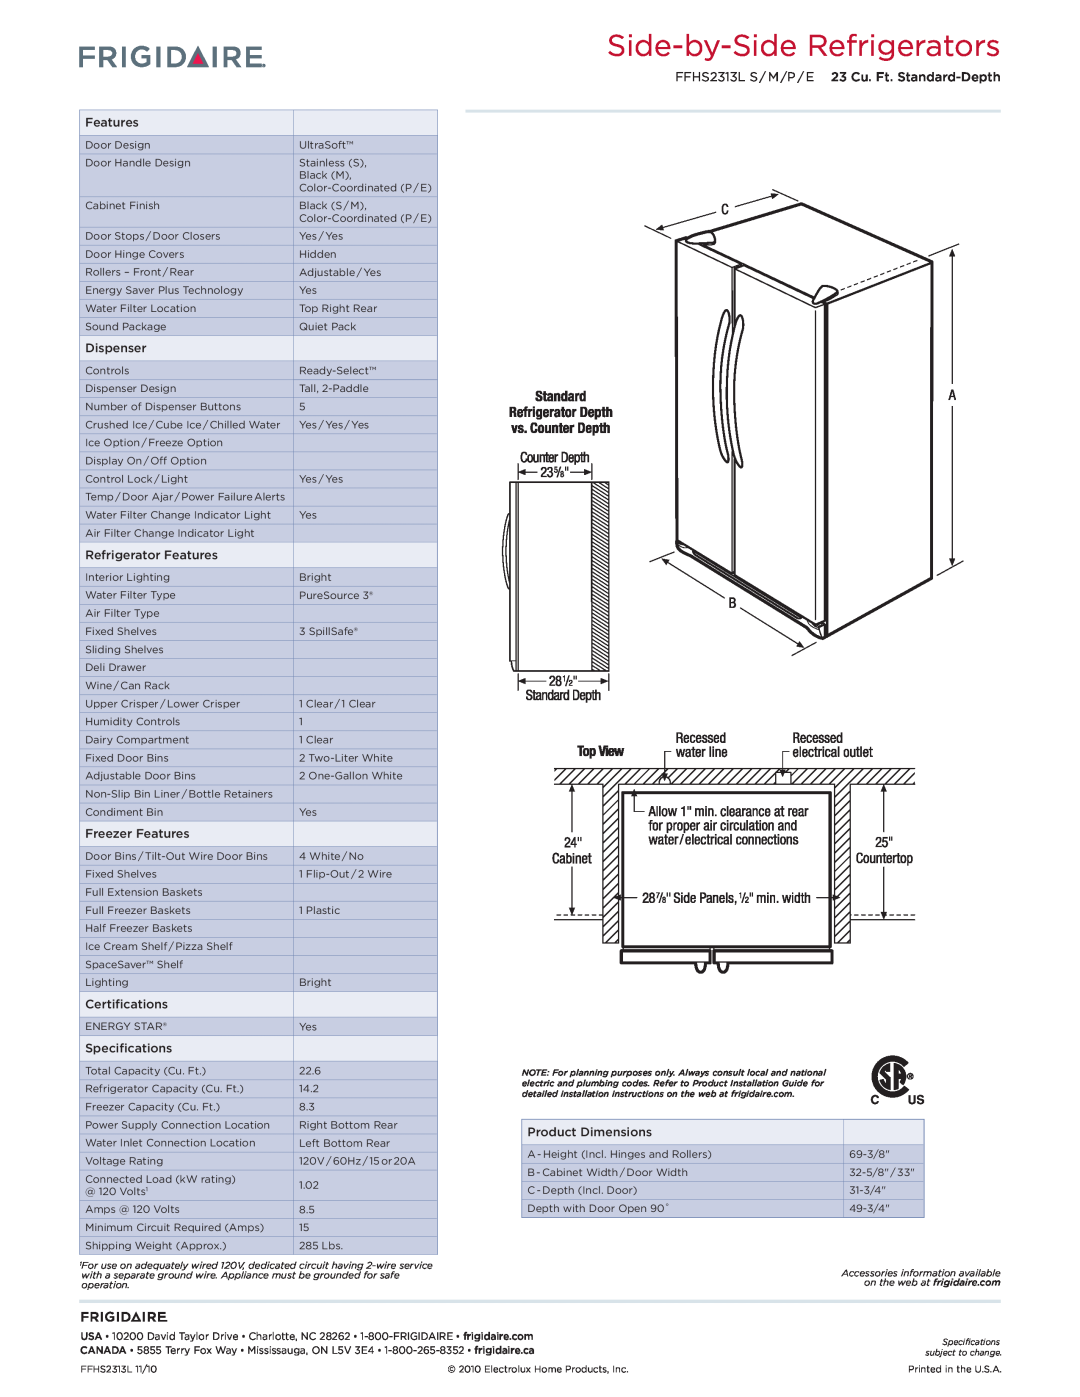 Frigidaire dimensions Side-by-SideRefrigerators, FFHS2313L S / M /P / E 23 Cu. Ft. Standard-Depth, Features, Dispenser 